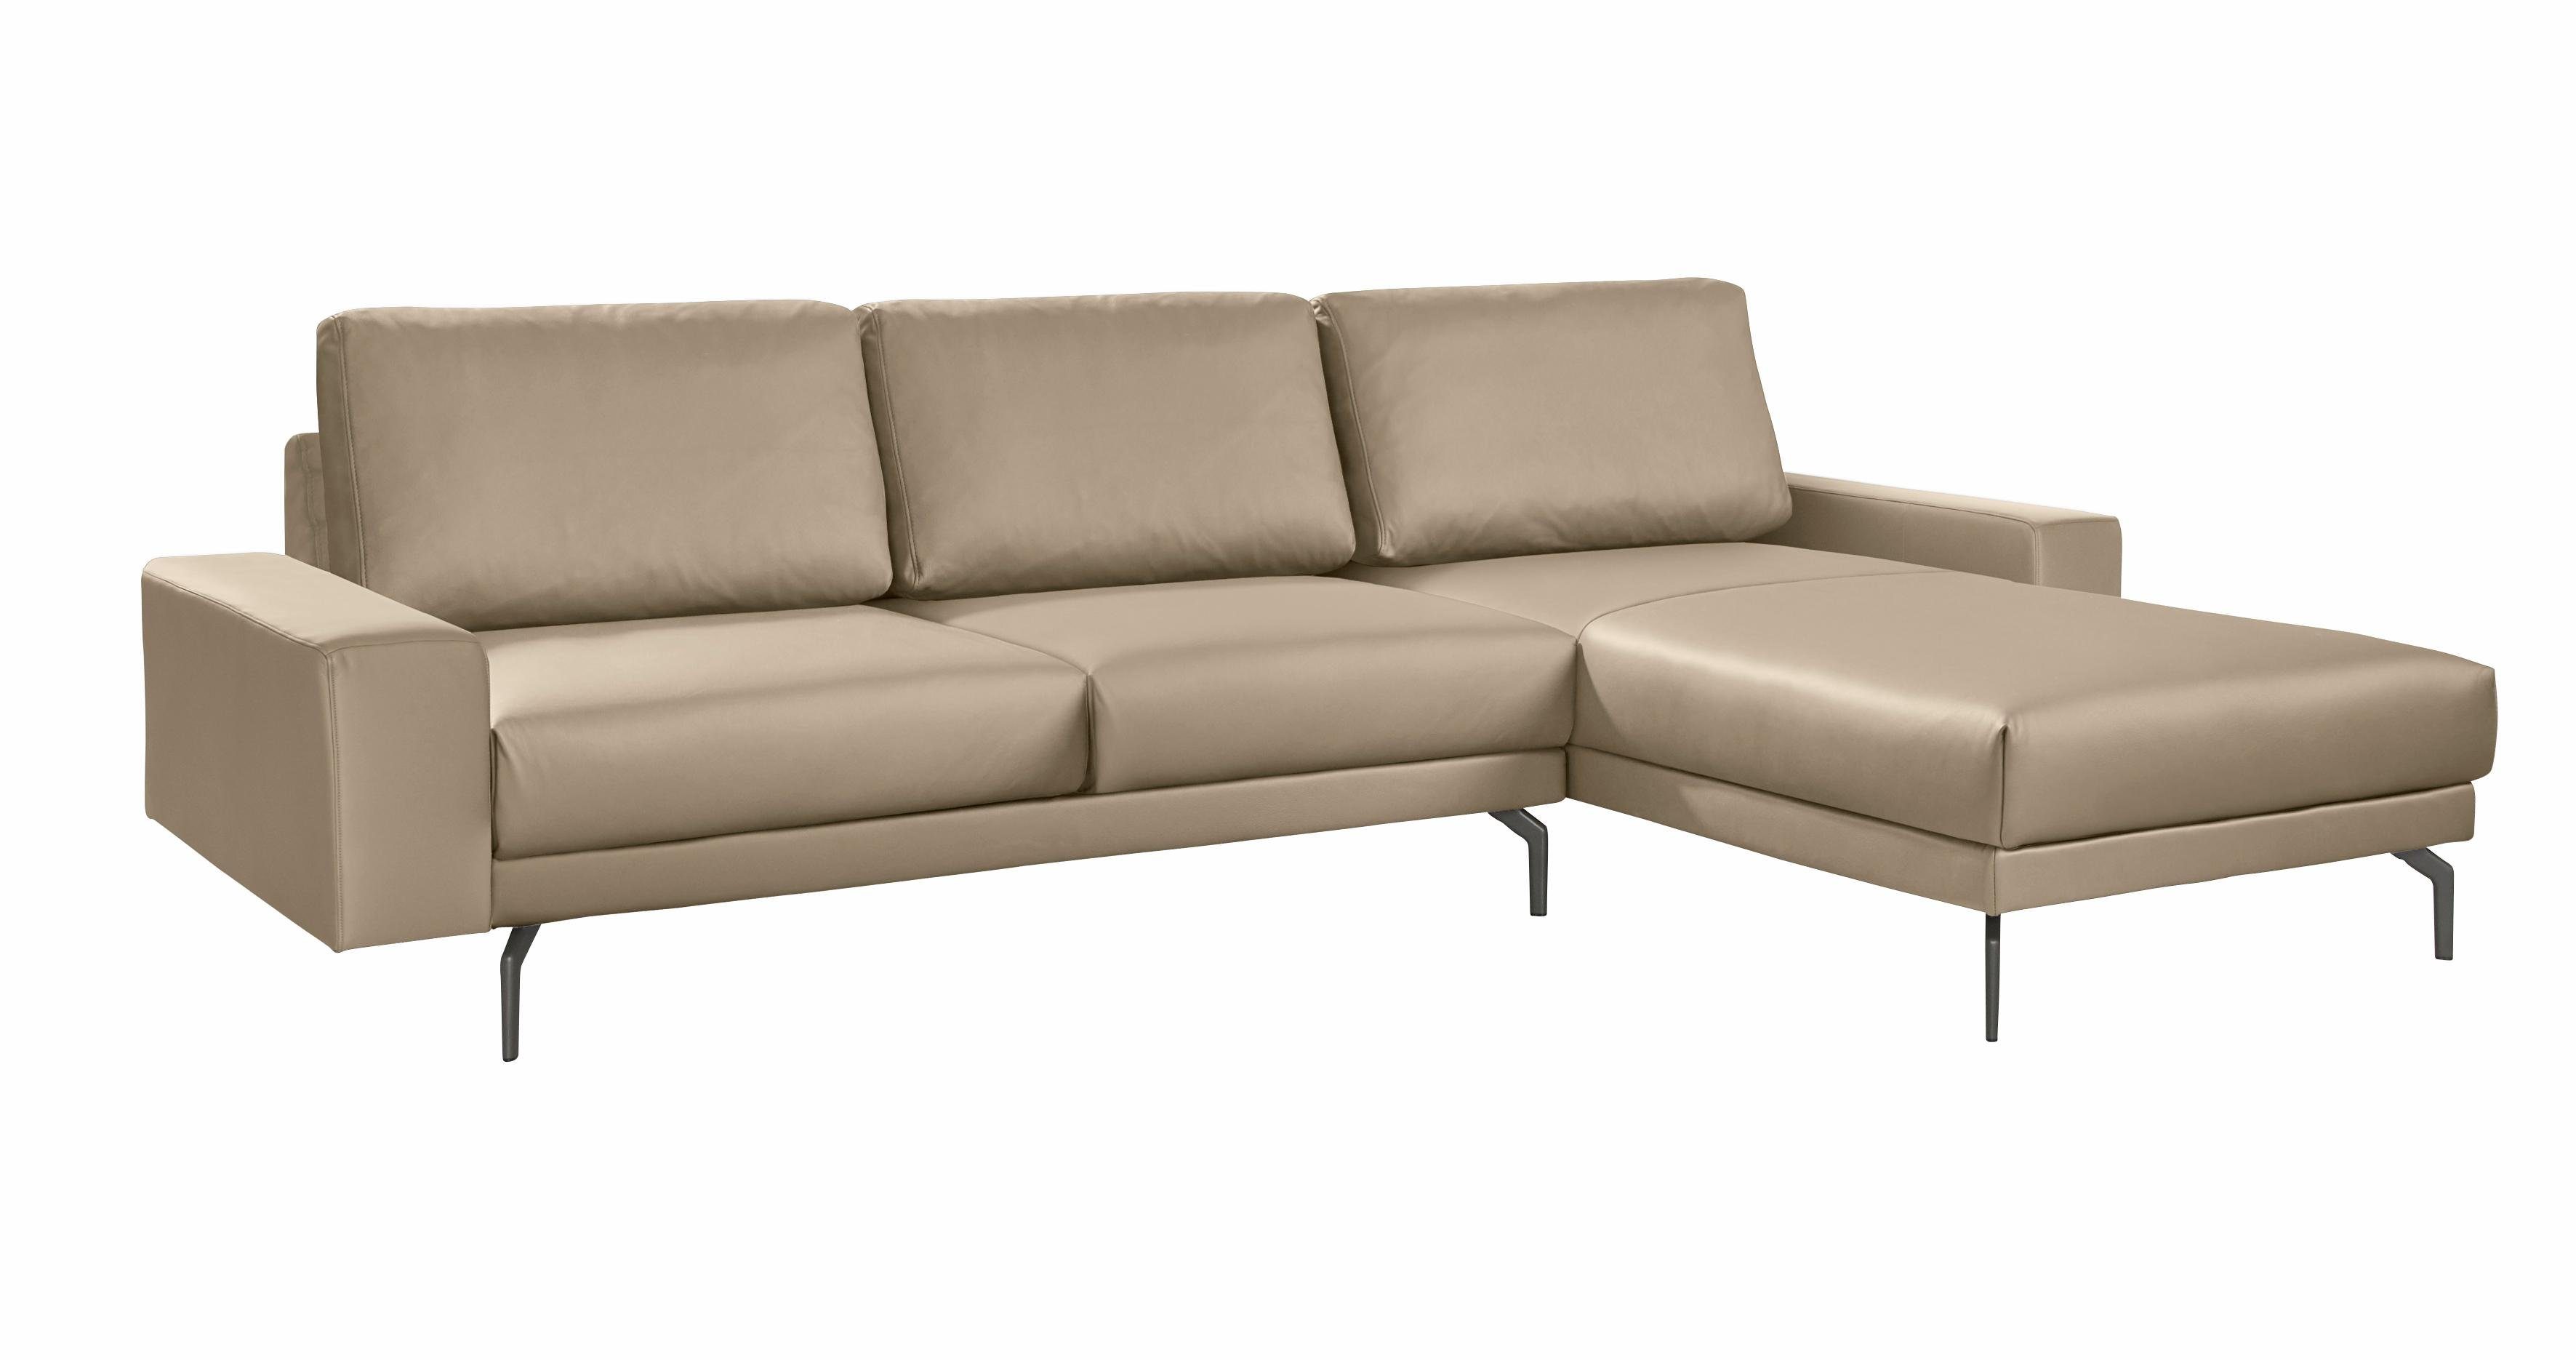 niedrig, cm in 274 sofa breit Alugussfüße Ecksofa umbragrau, und Breite hs.450, hülsta Armlehne